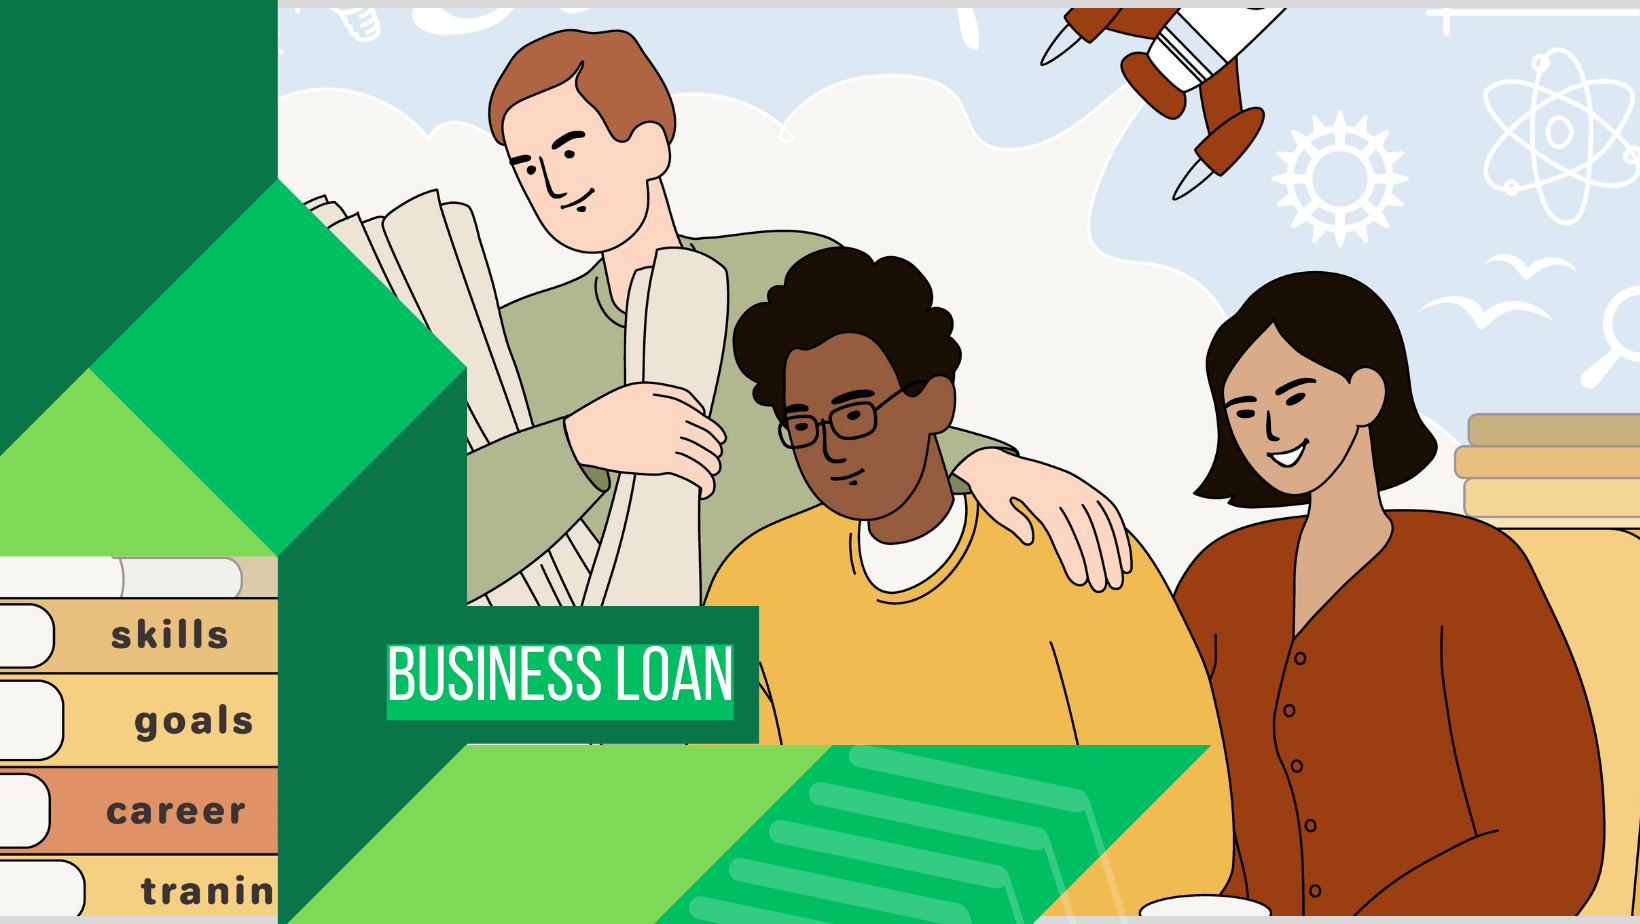 nrbcbank-business-loan-best-enterprenour-loan-in-bangladesh